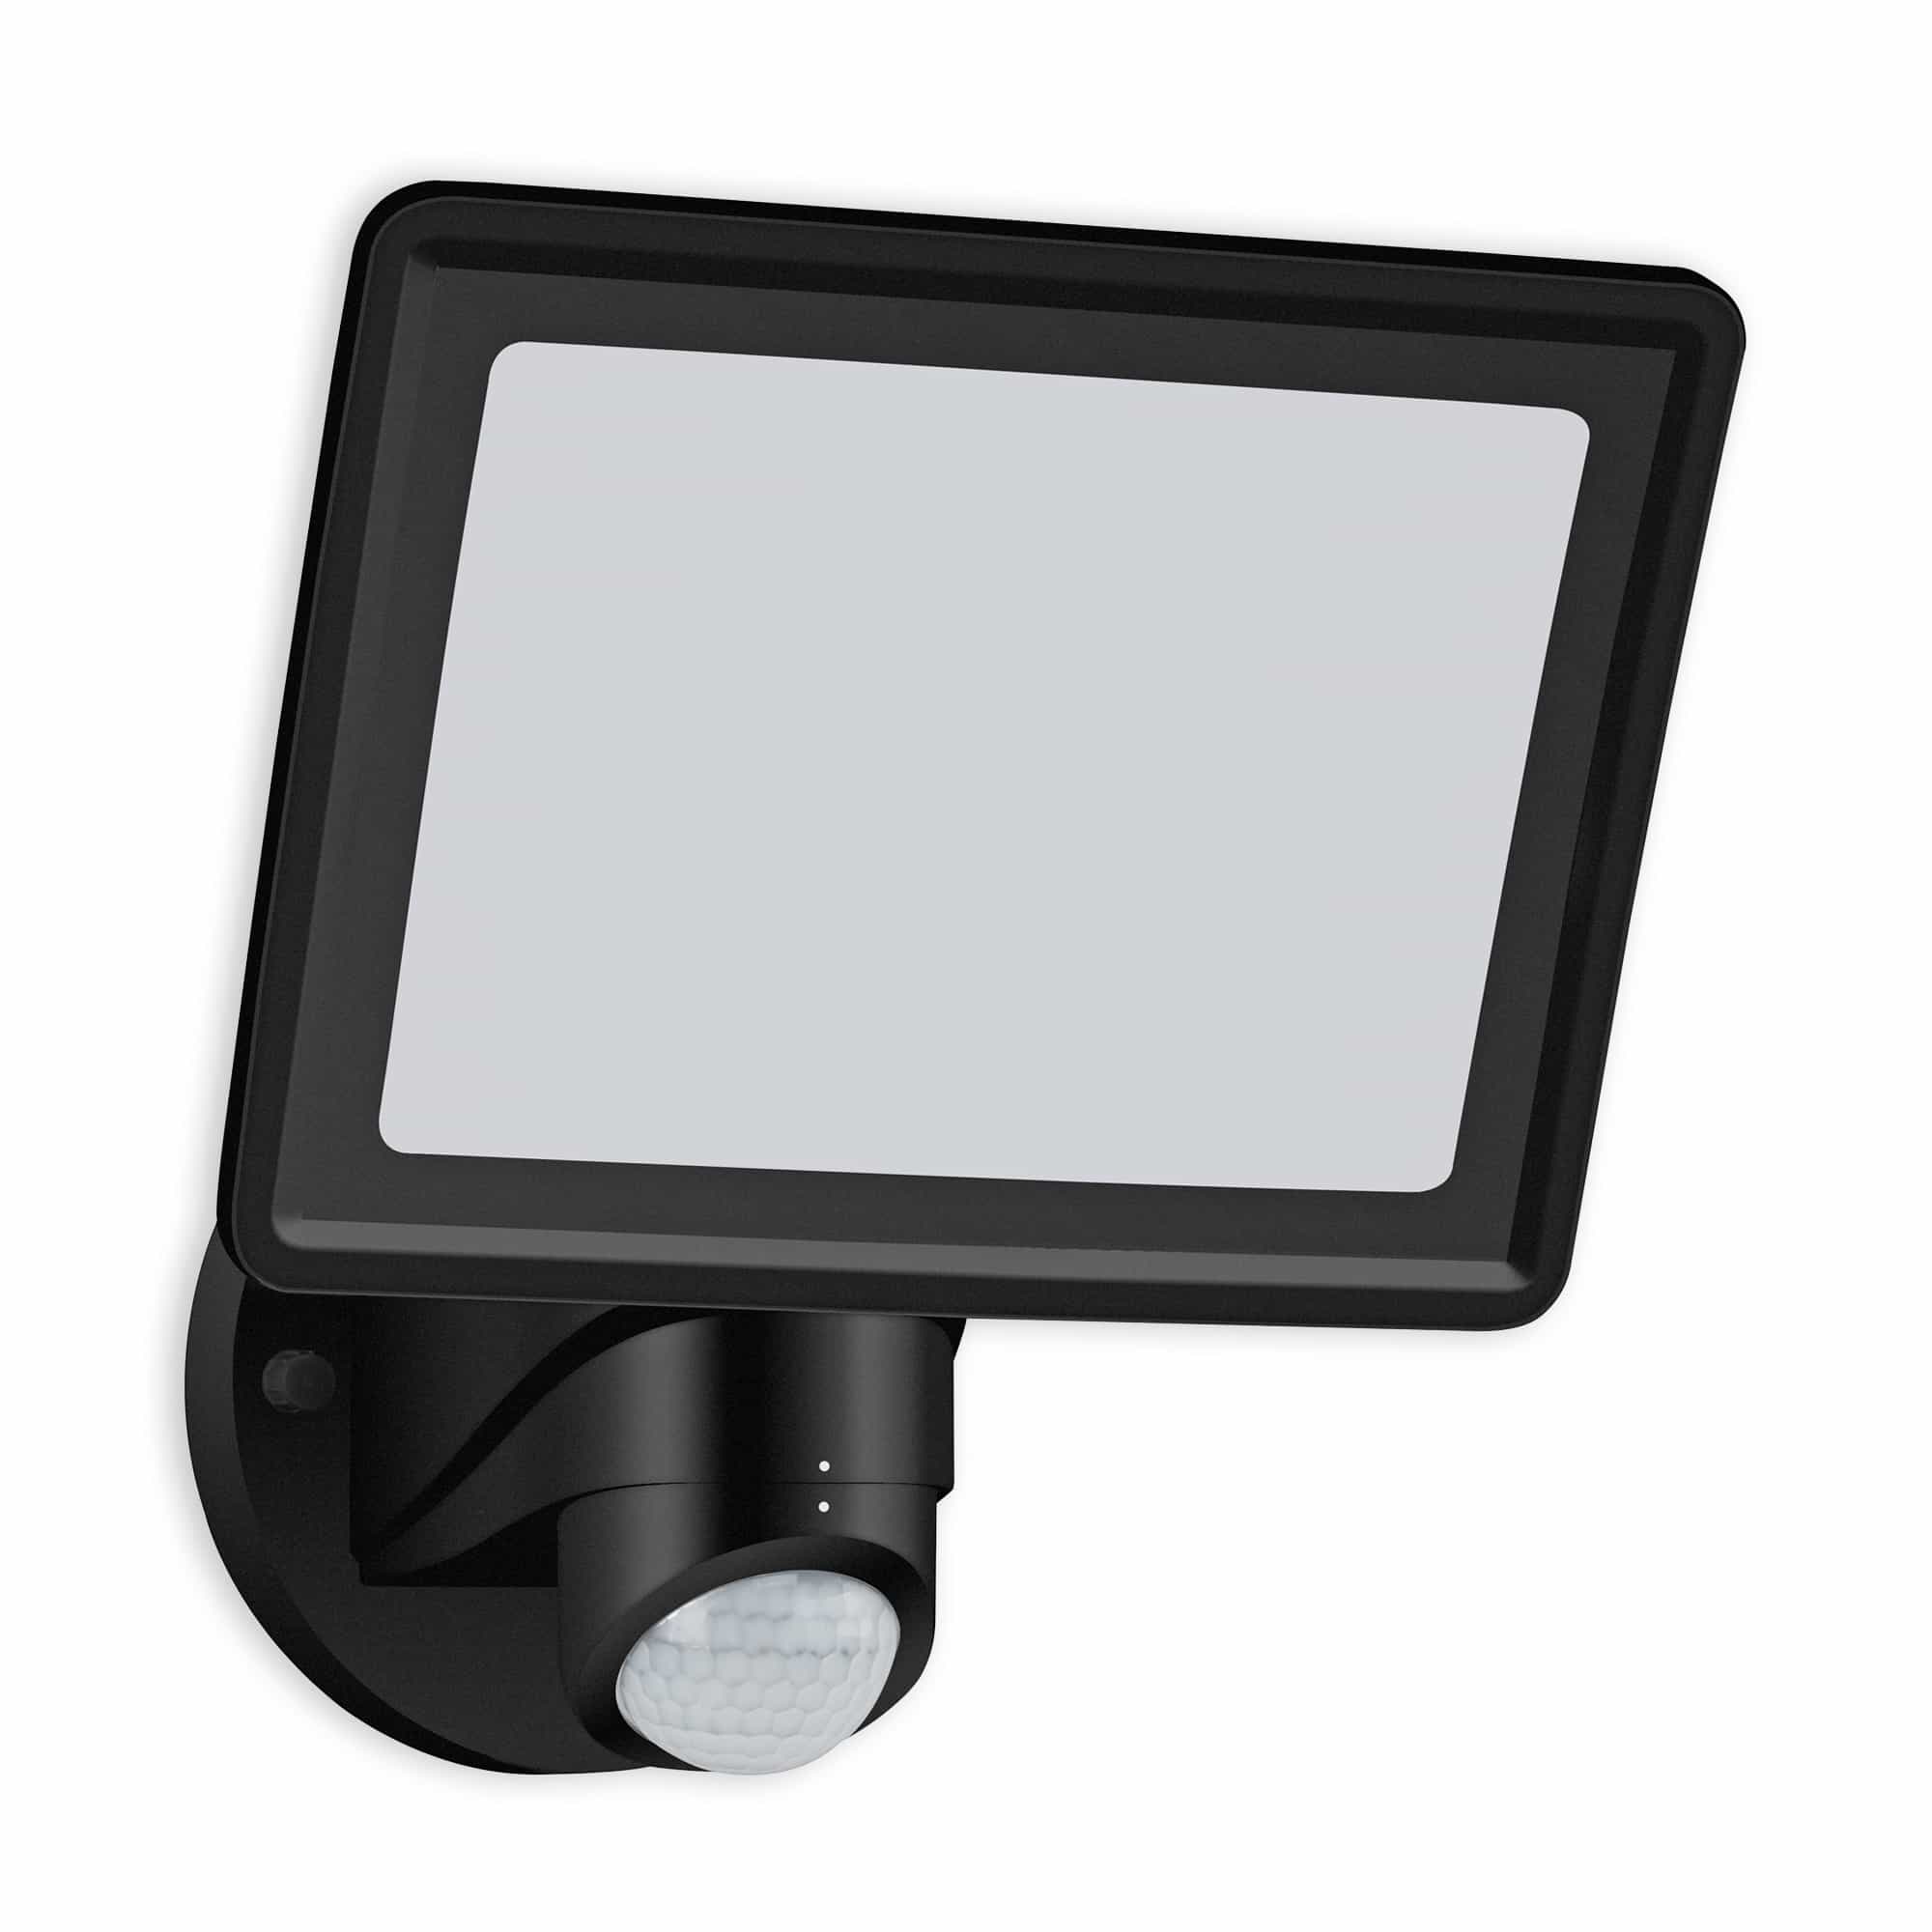 Capteur LED Telefunken Spotlight externe, 26,3 cm, 20 W, noir